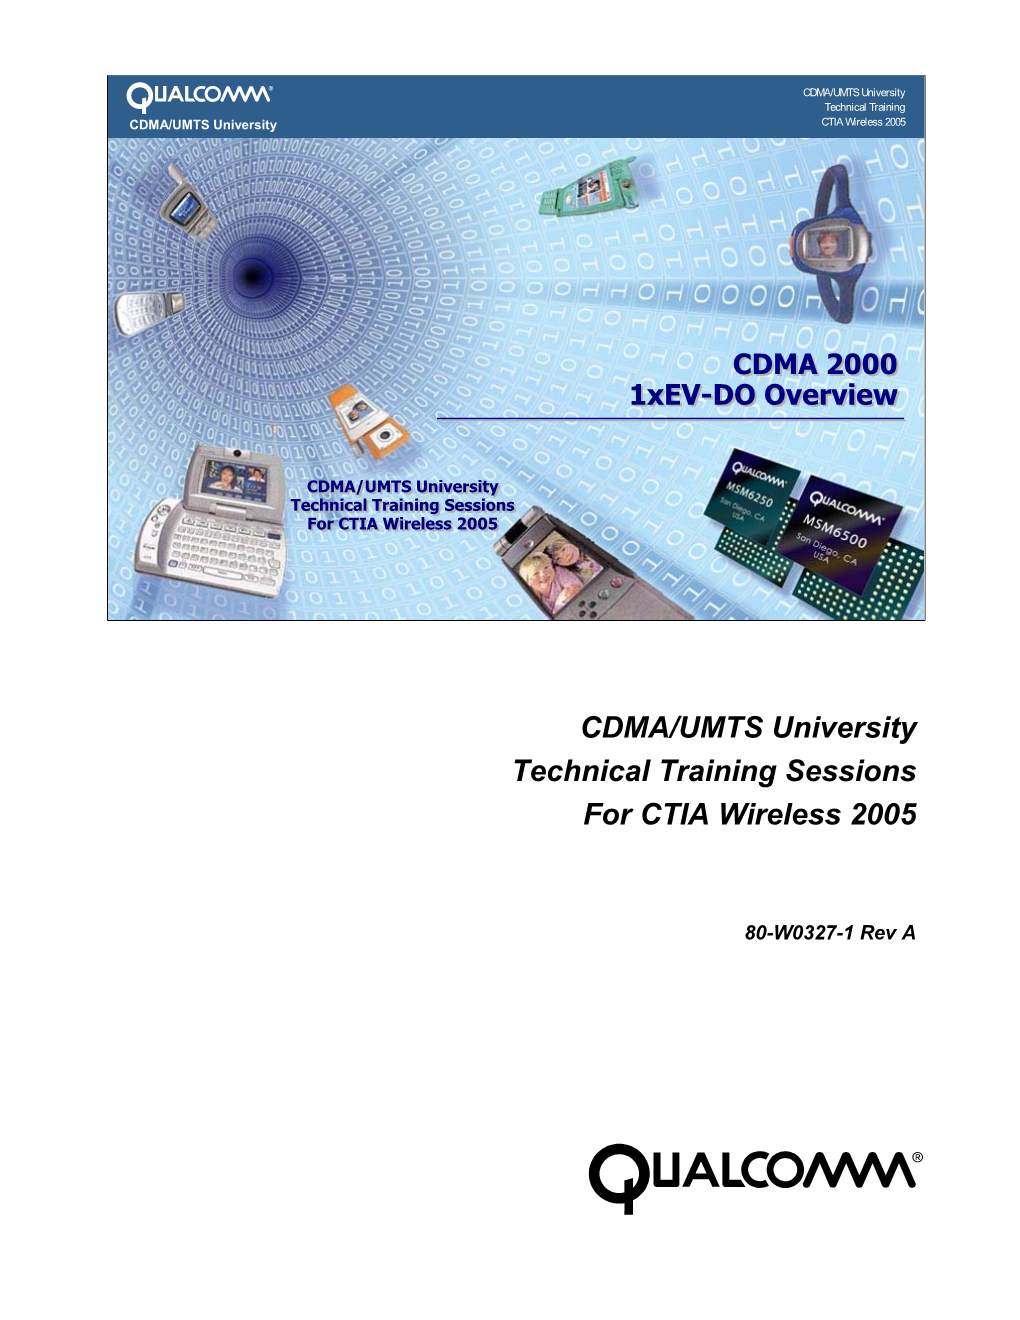 CDMA/UMTS University Technical Training Sessions for CTIA Wireless 2005